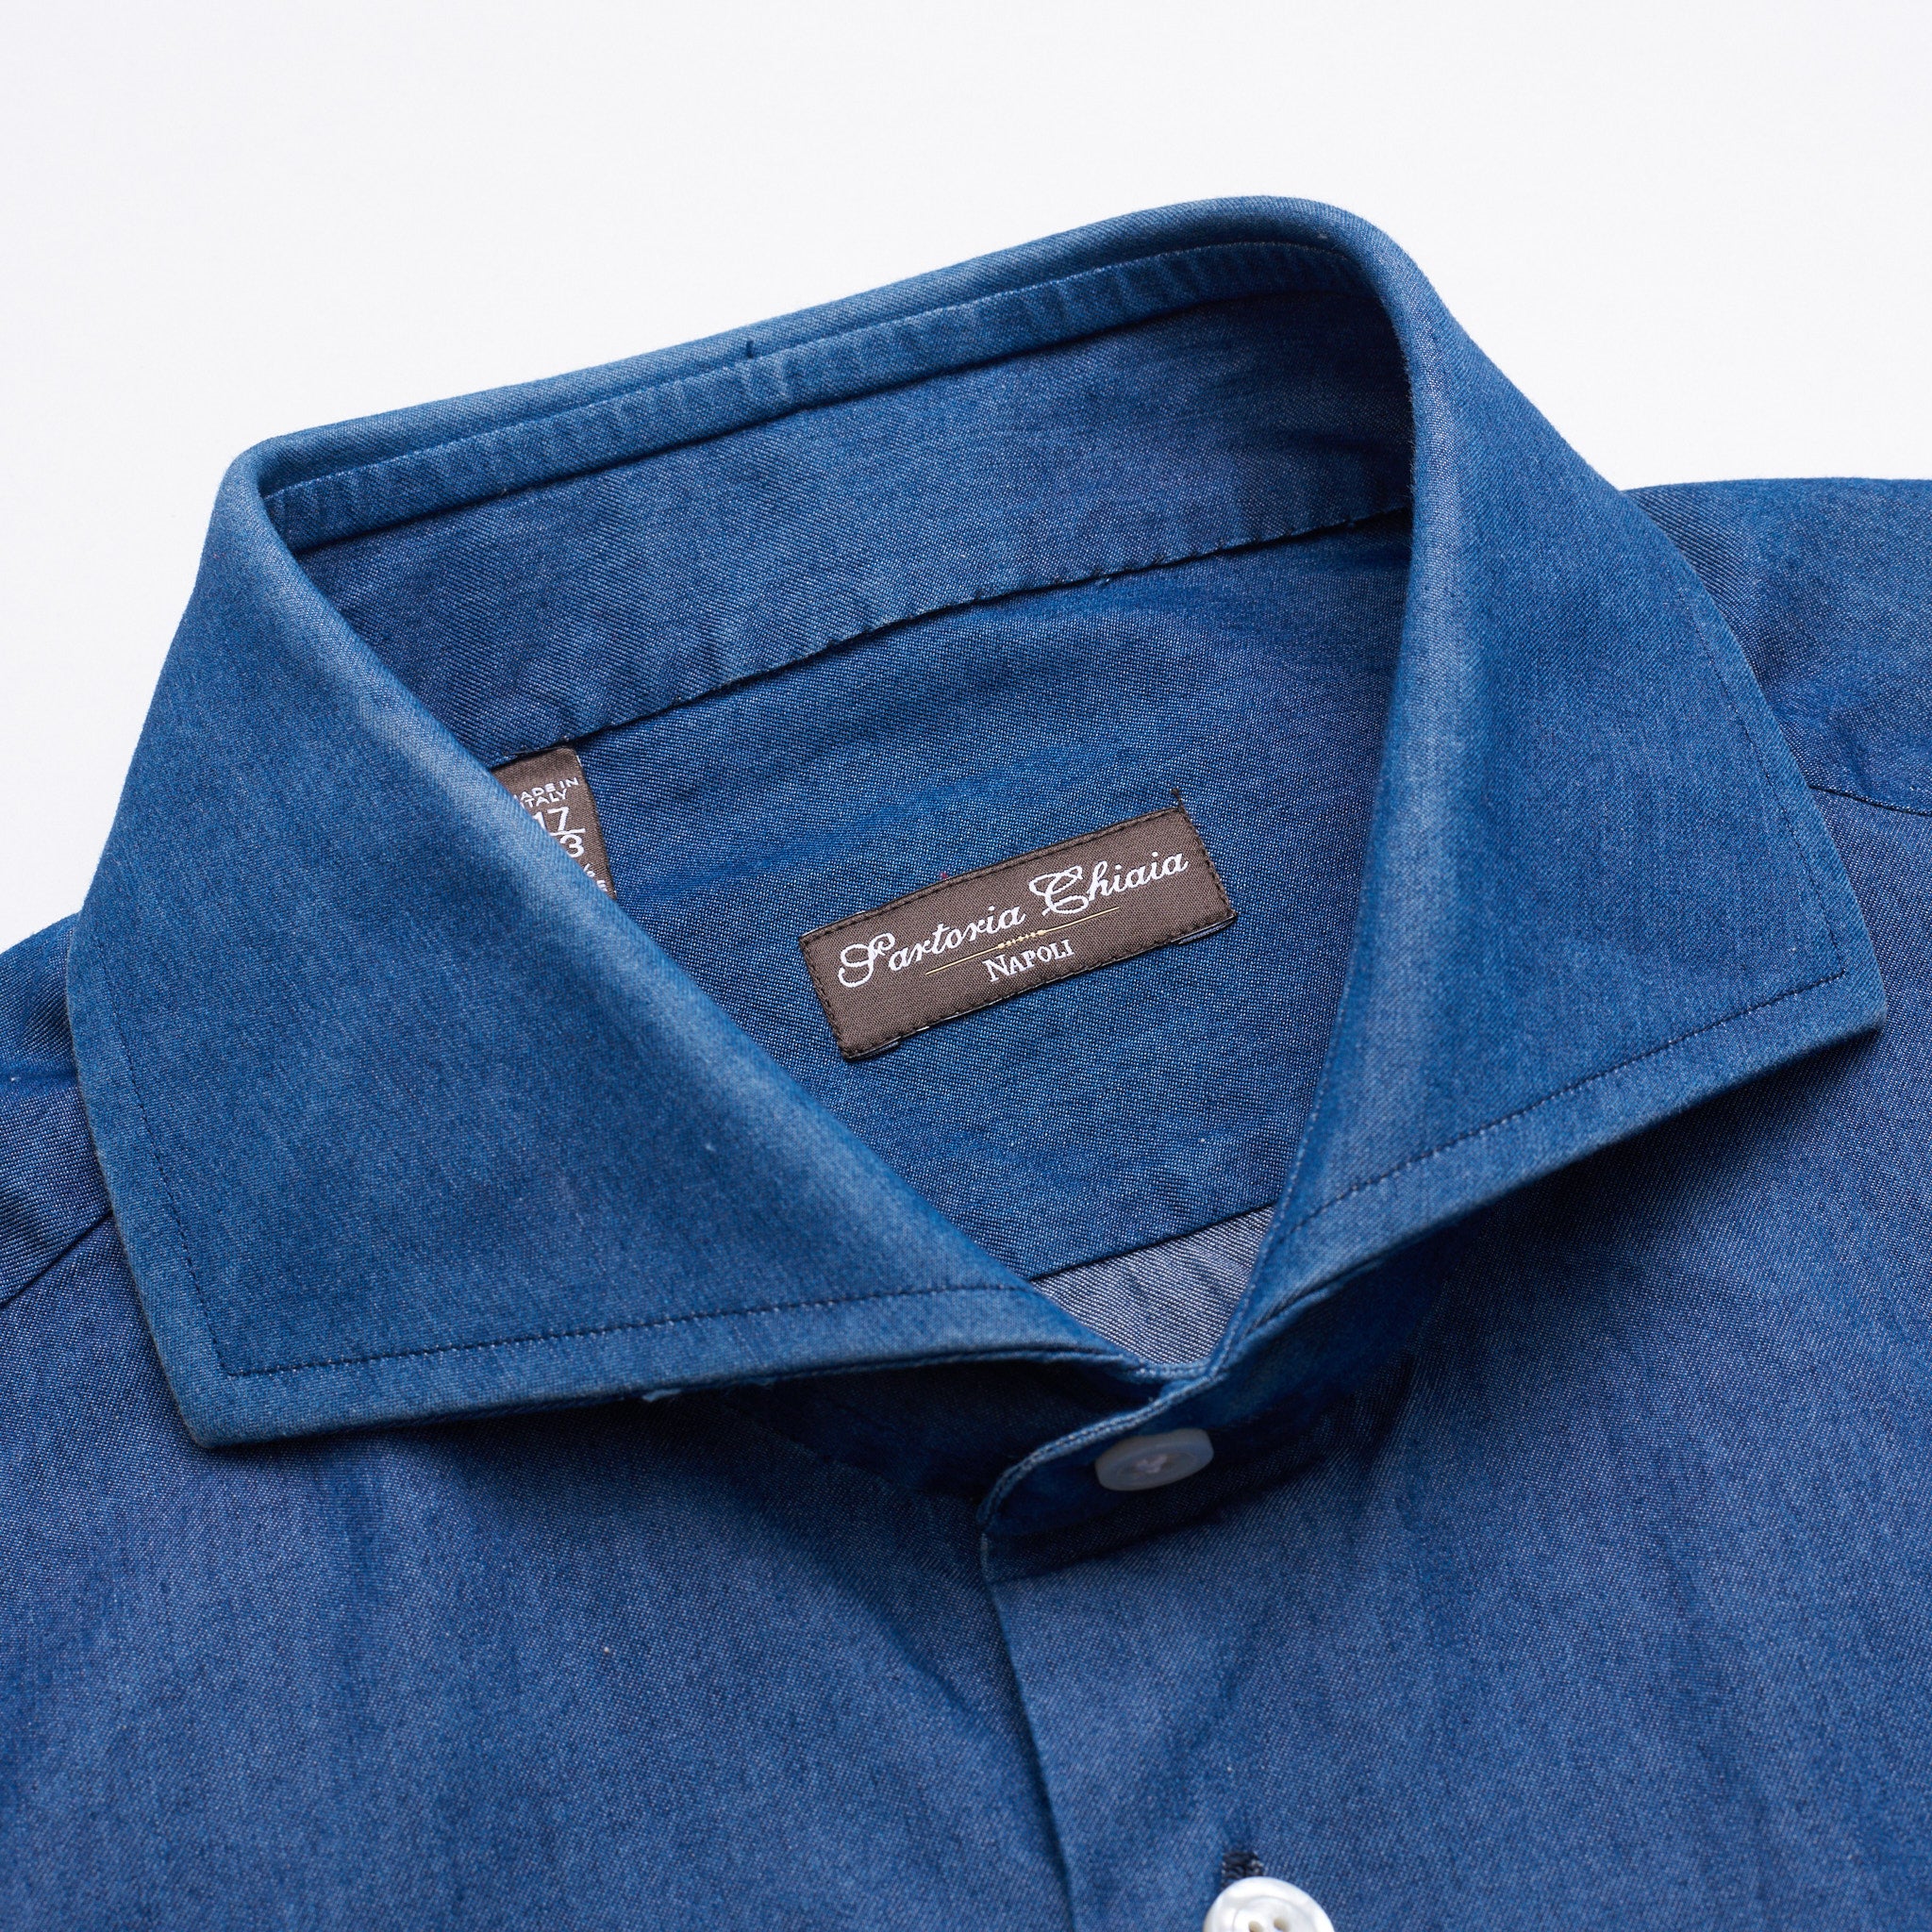 Sartoria CHIAIA Napoli Handmade Blue Cotton Denim French Cuff Shirt EU 43 US 17 Slim